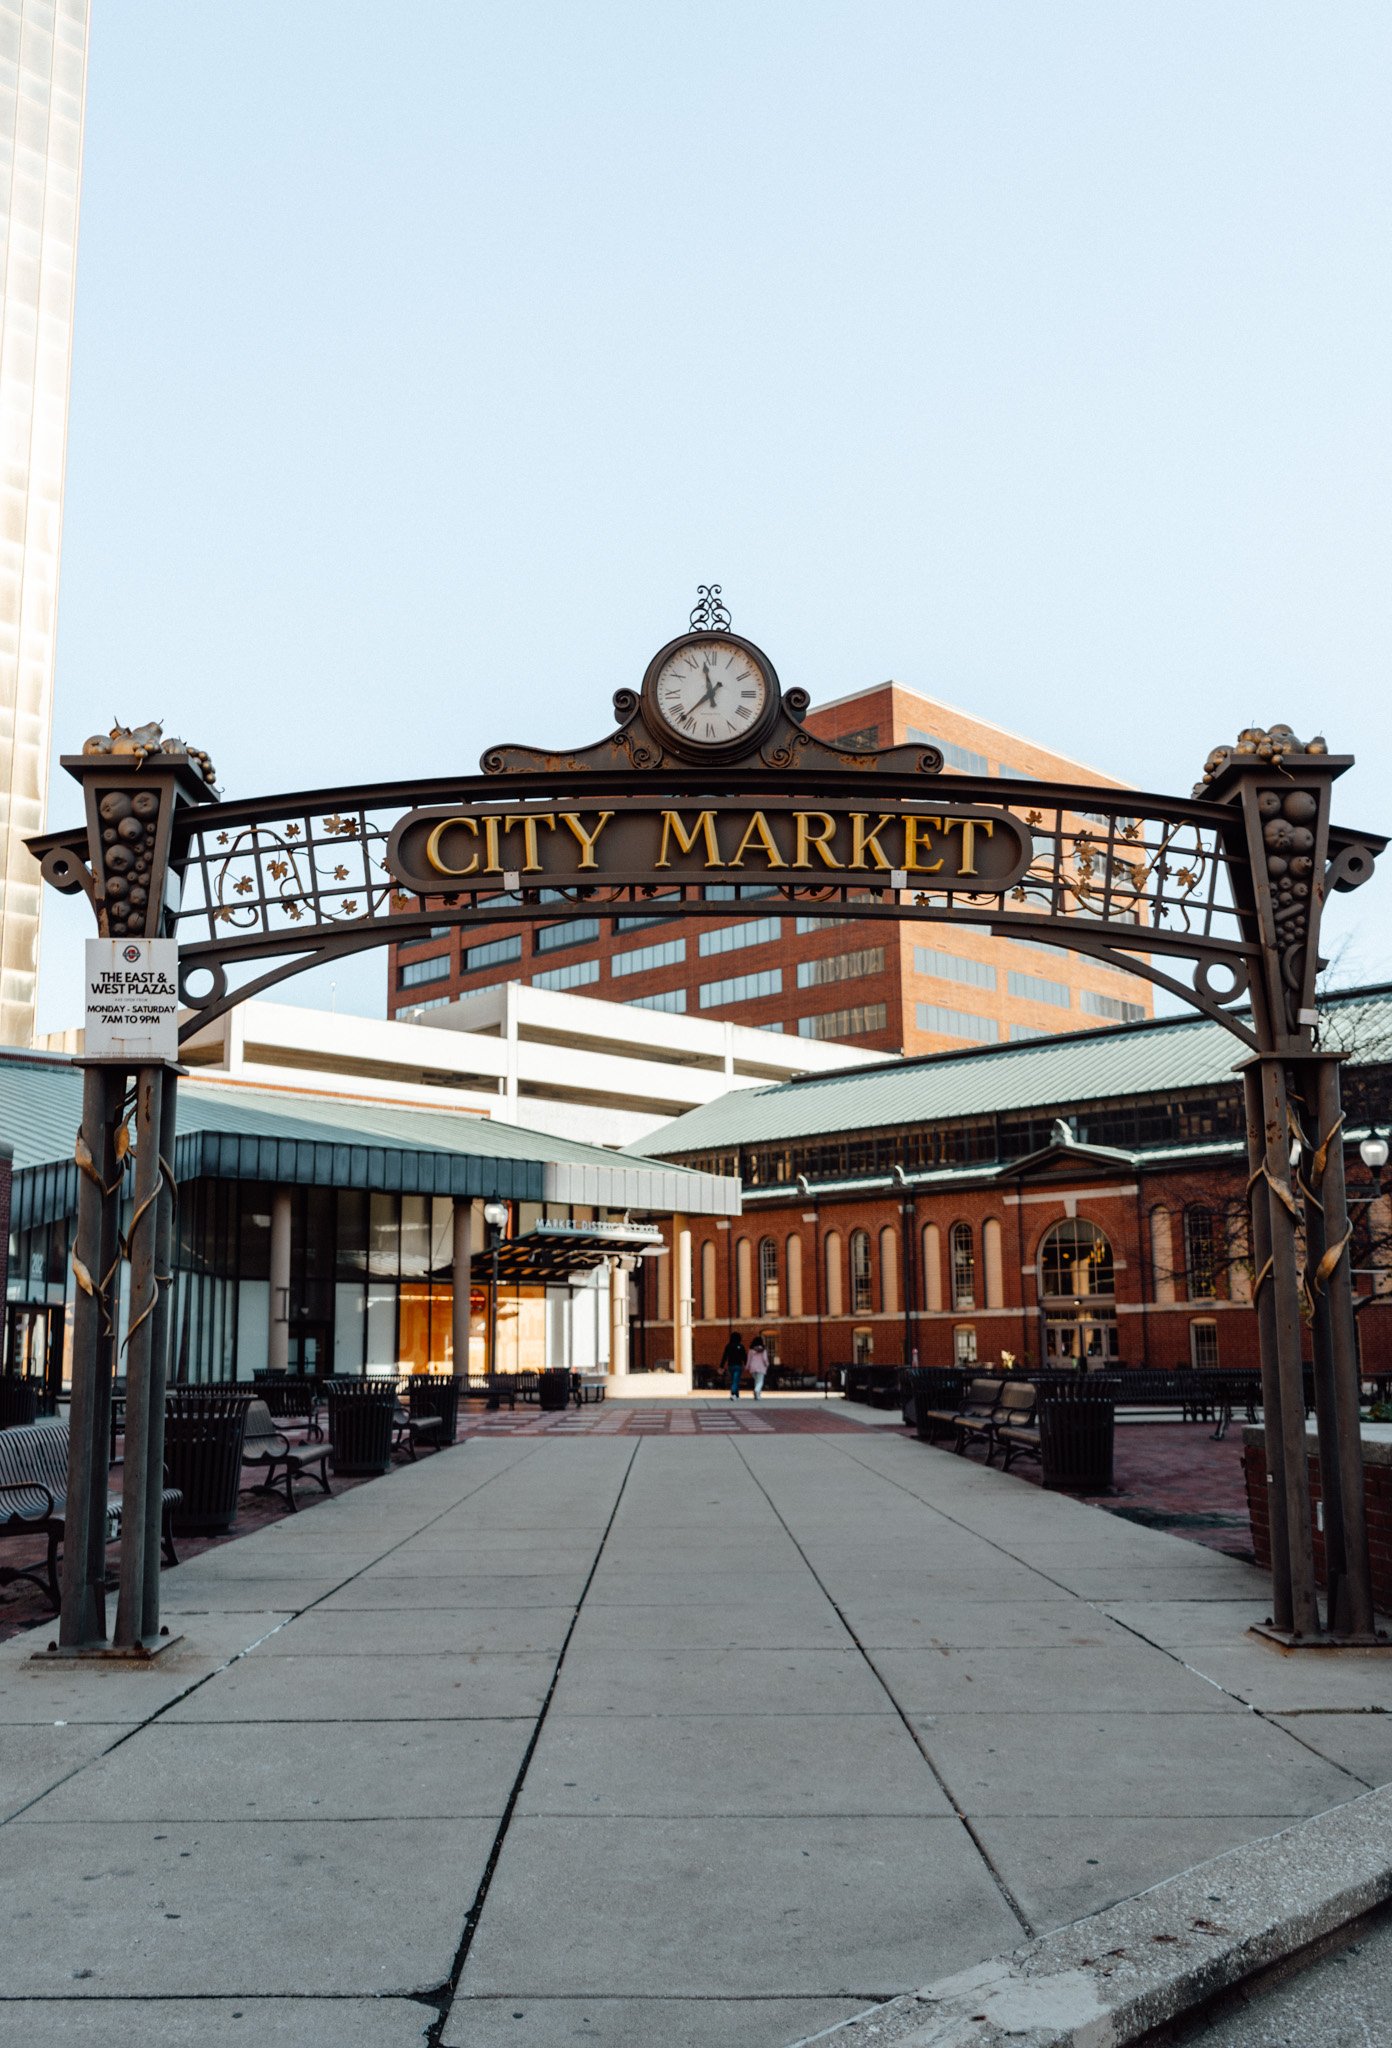 City Market in Indianapolis